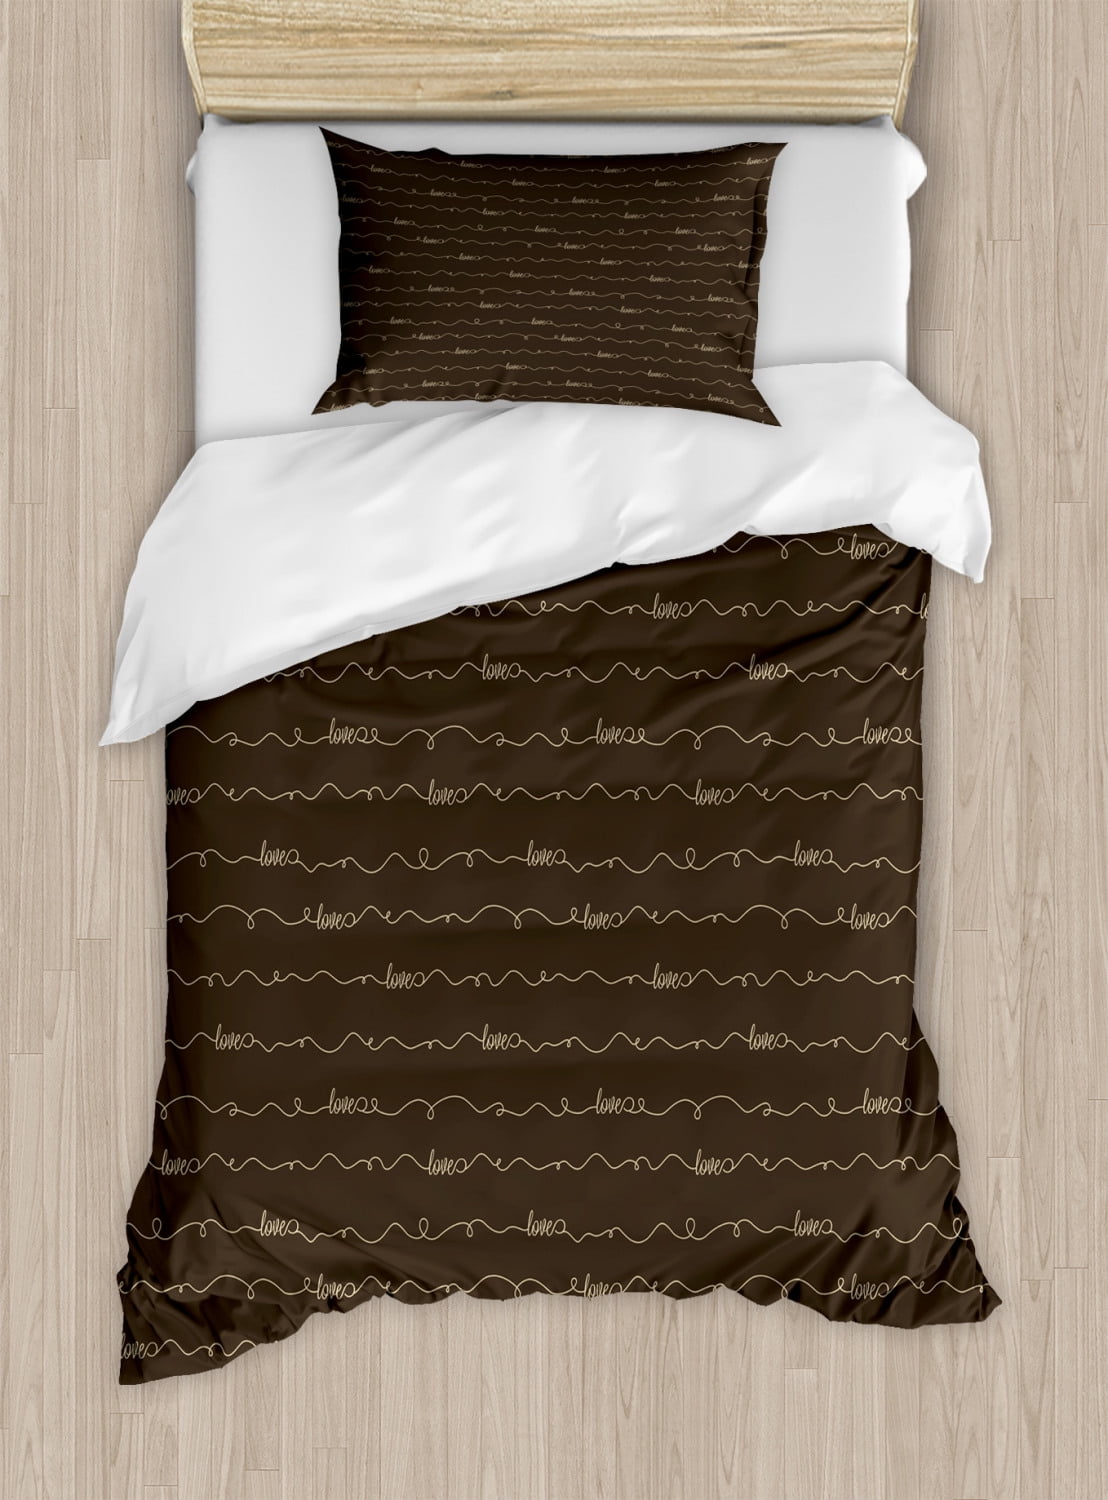 Piece Bedding Set With 1 Pillow Sham, Dark Brown King Size Duvet Cover